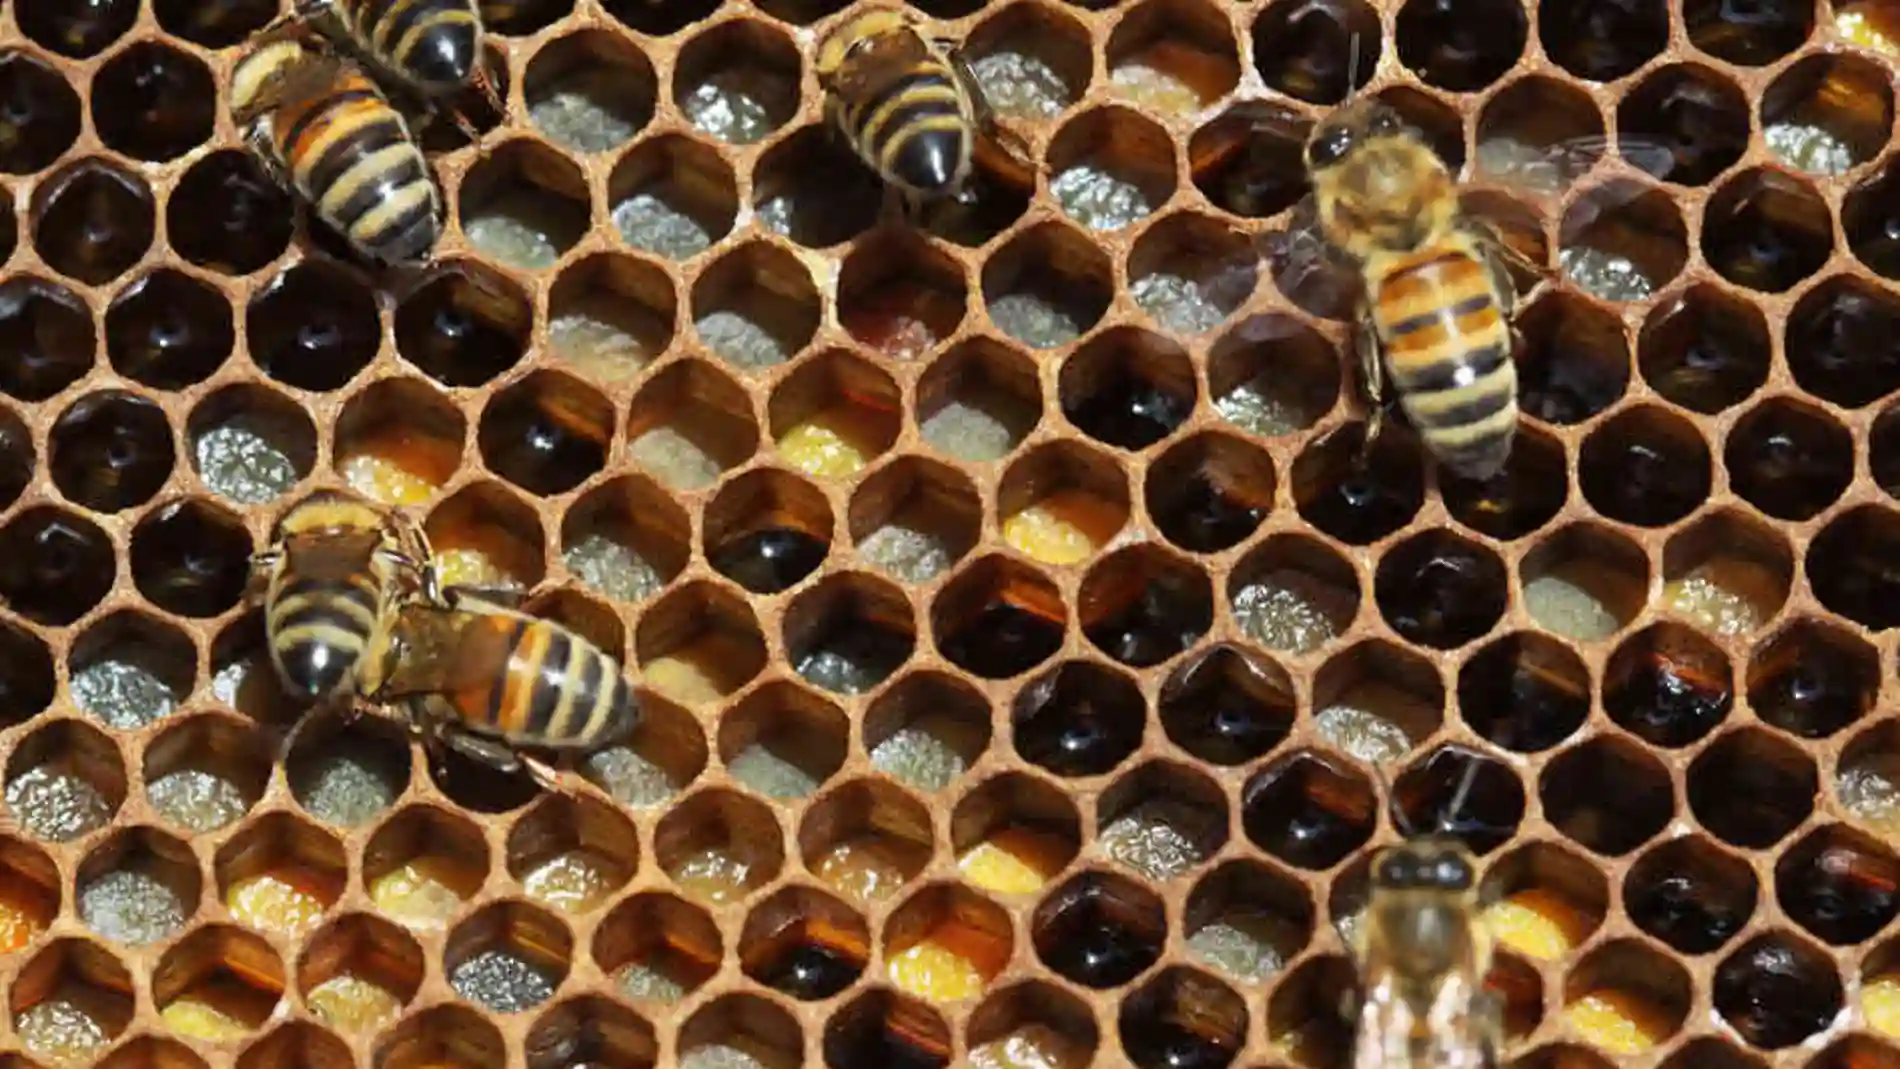 Imagen de un panal de abejas, constituido por formas geométricas